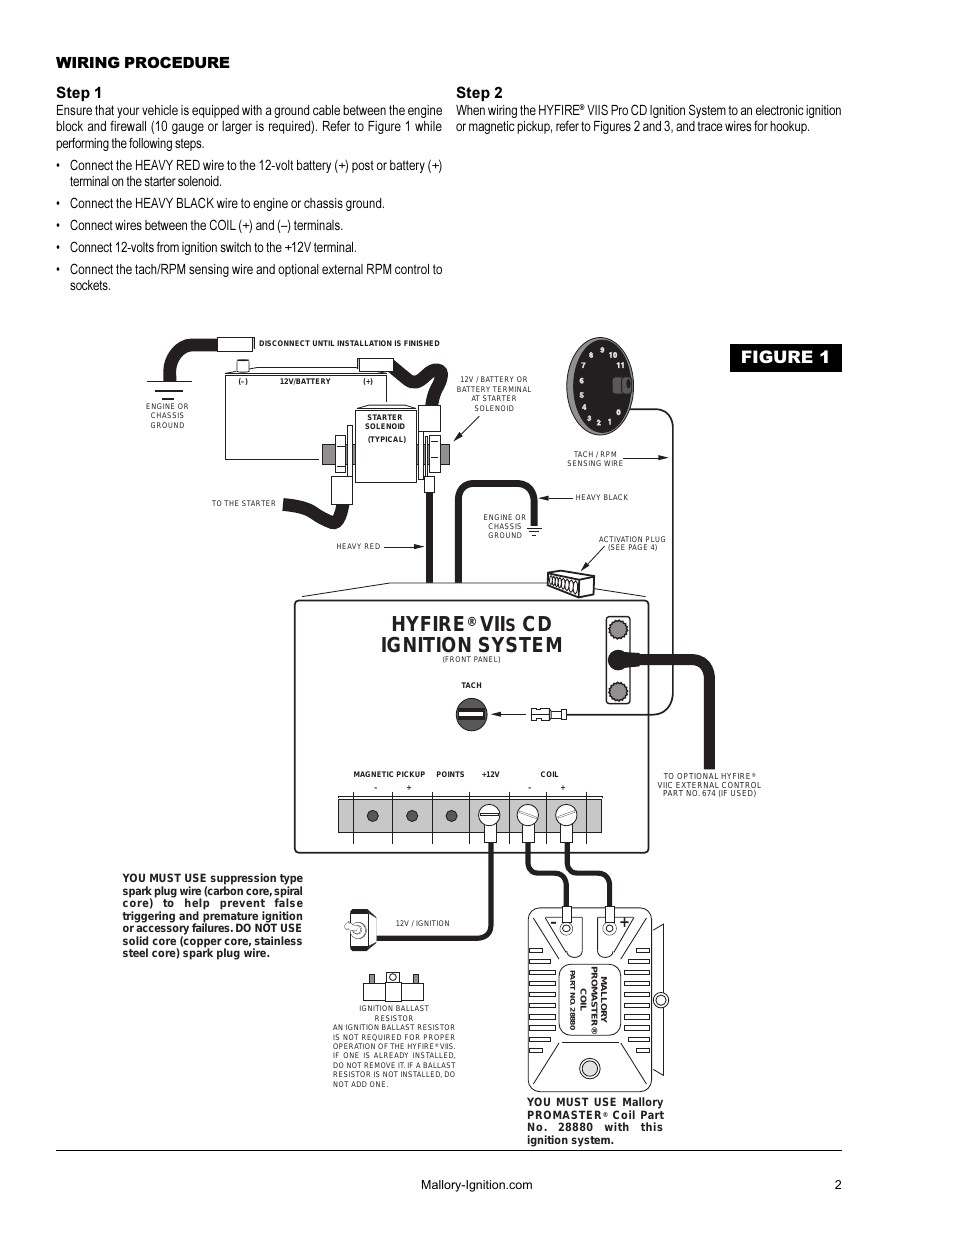 mallory wiring diagrams wiring diagram